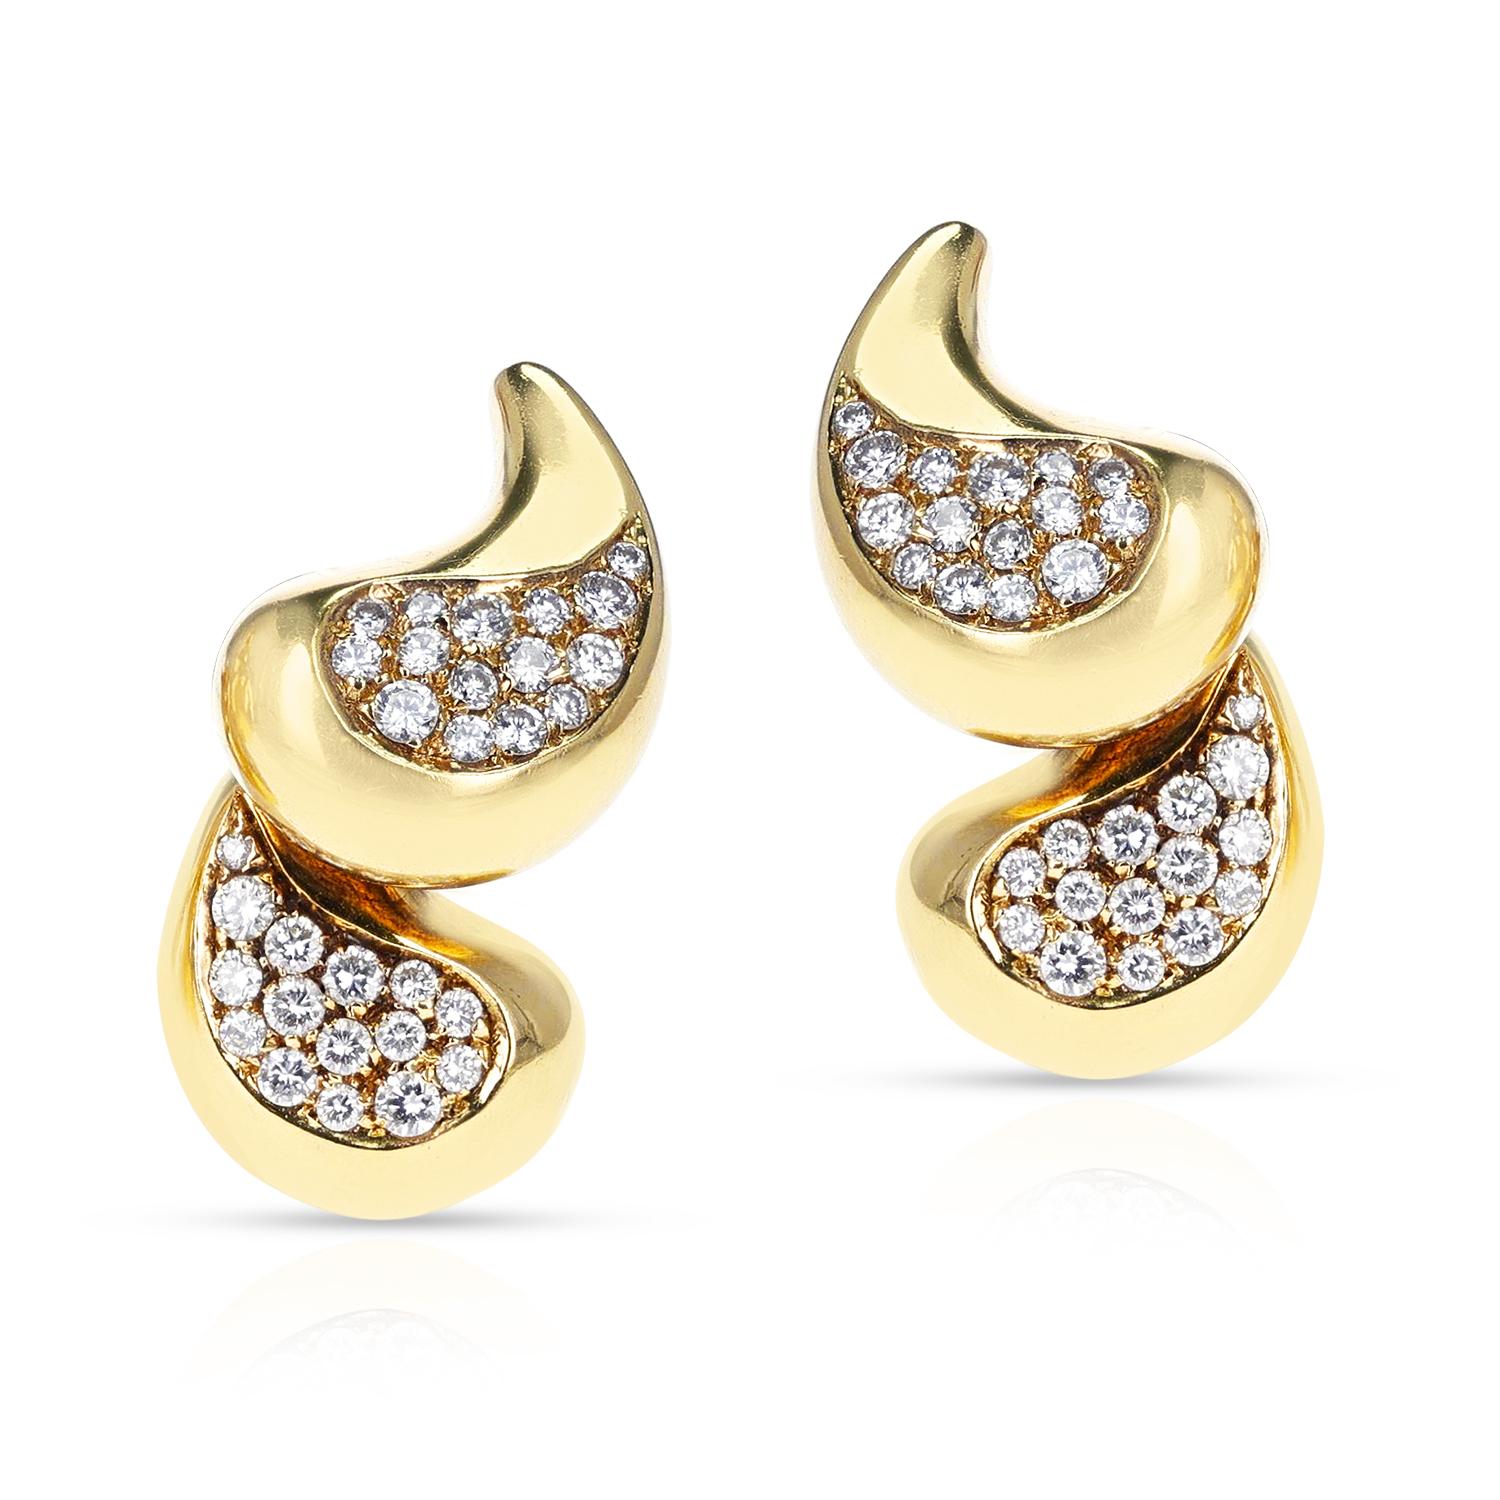 Marina B Boucles d'oreilles en or et diamants, 18 carats Excellent état - En vente à New York, NY